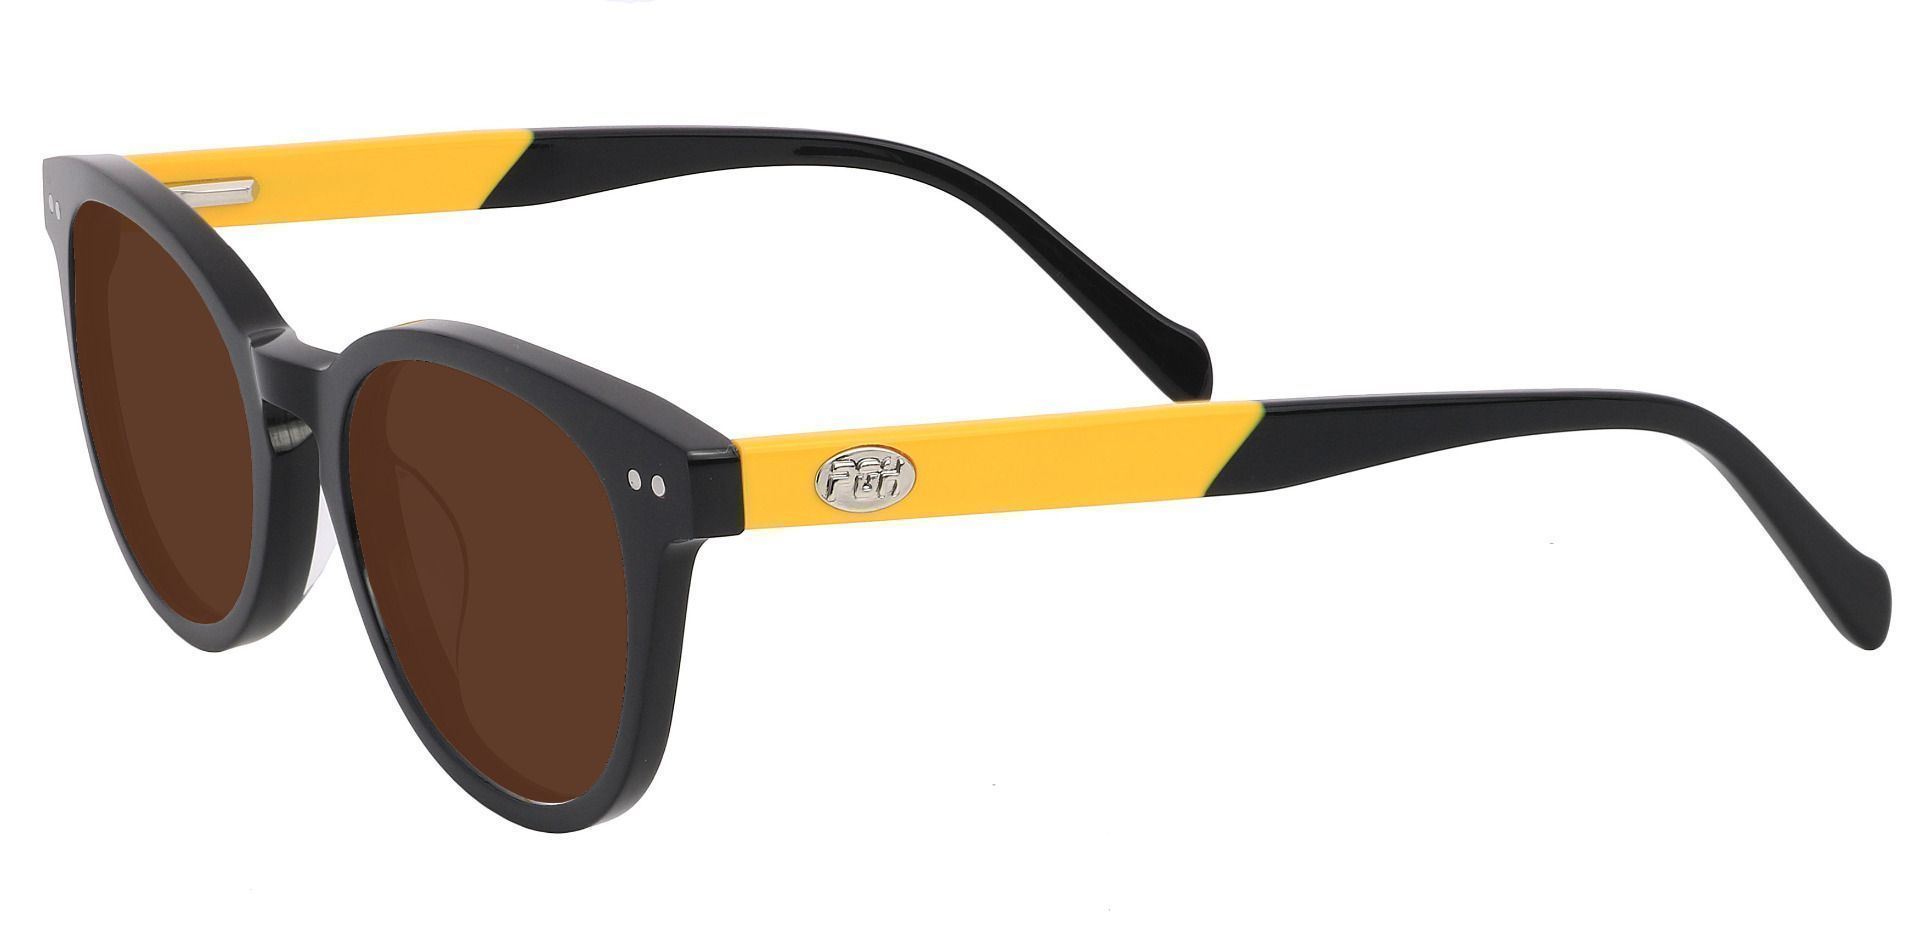 Forbes Oval Progressive Sunglasses - Black Frame With Brown Lenses